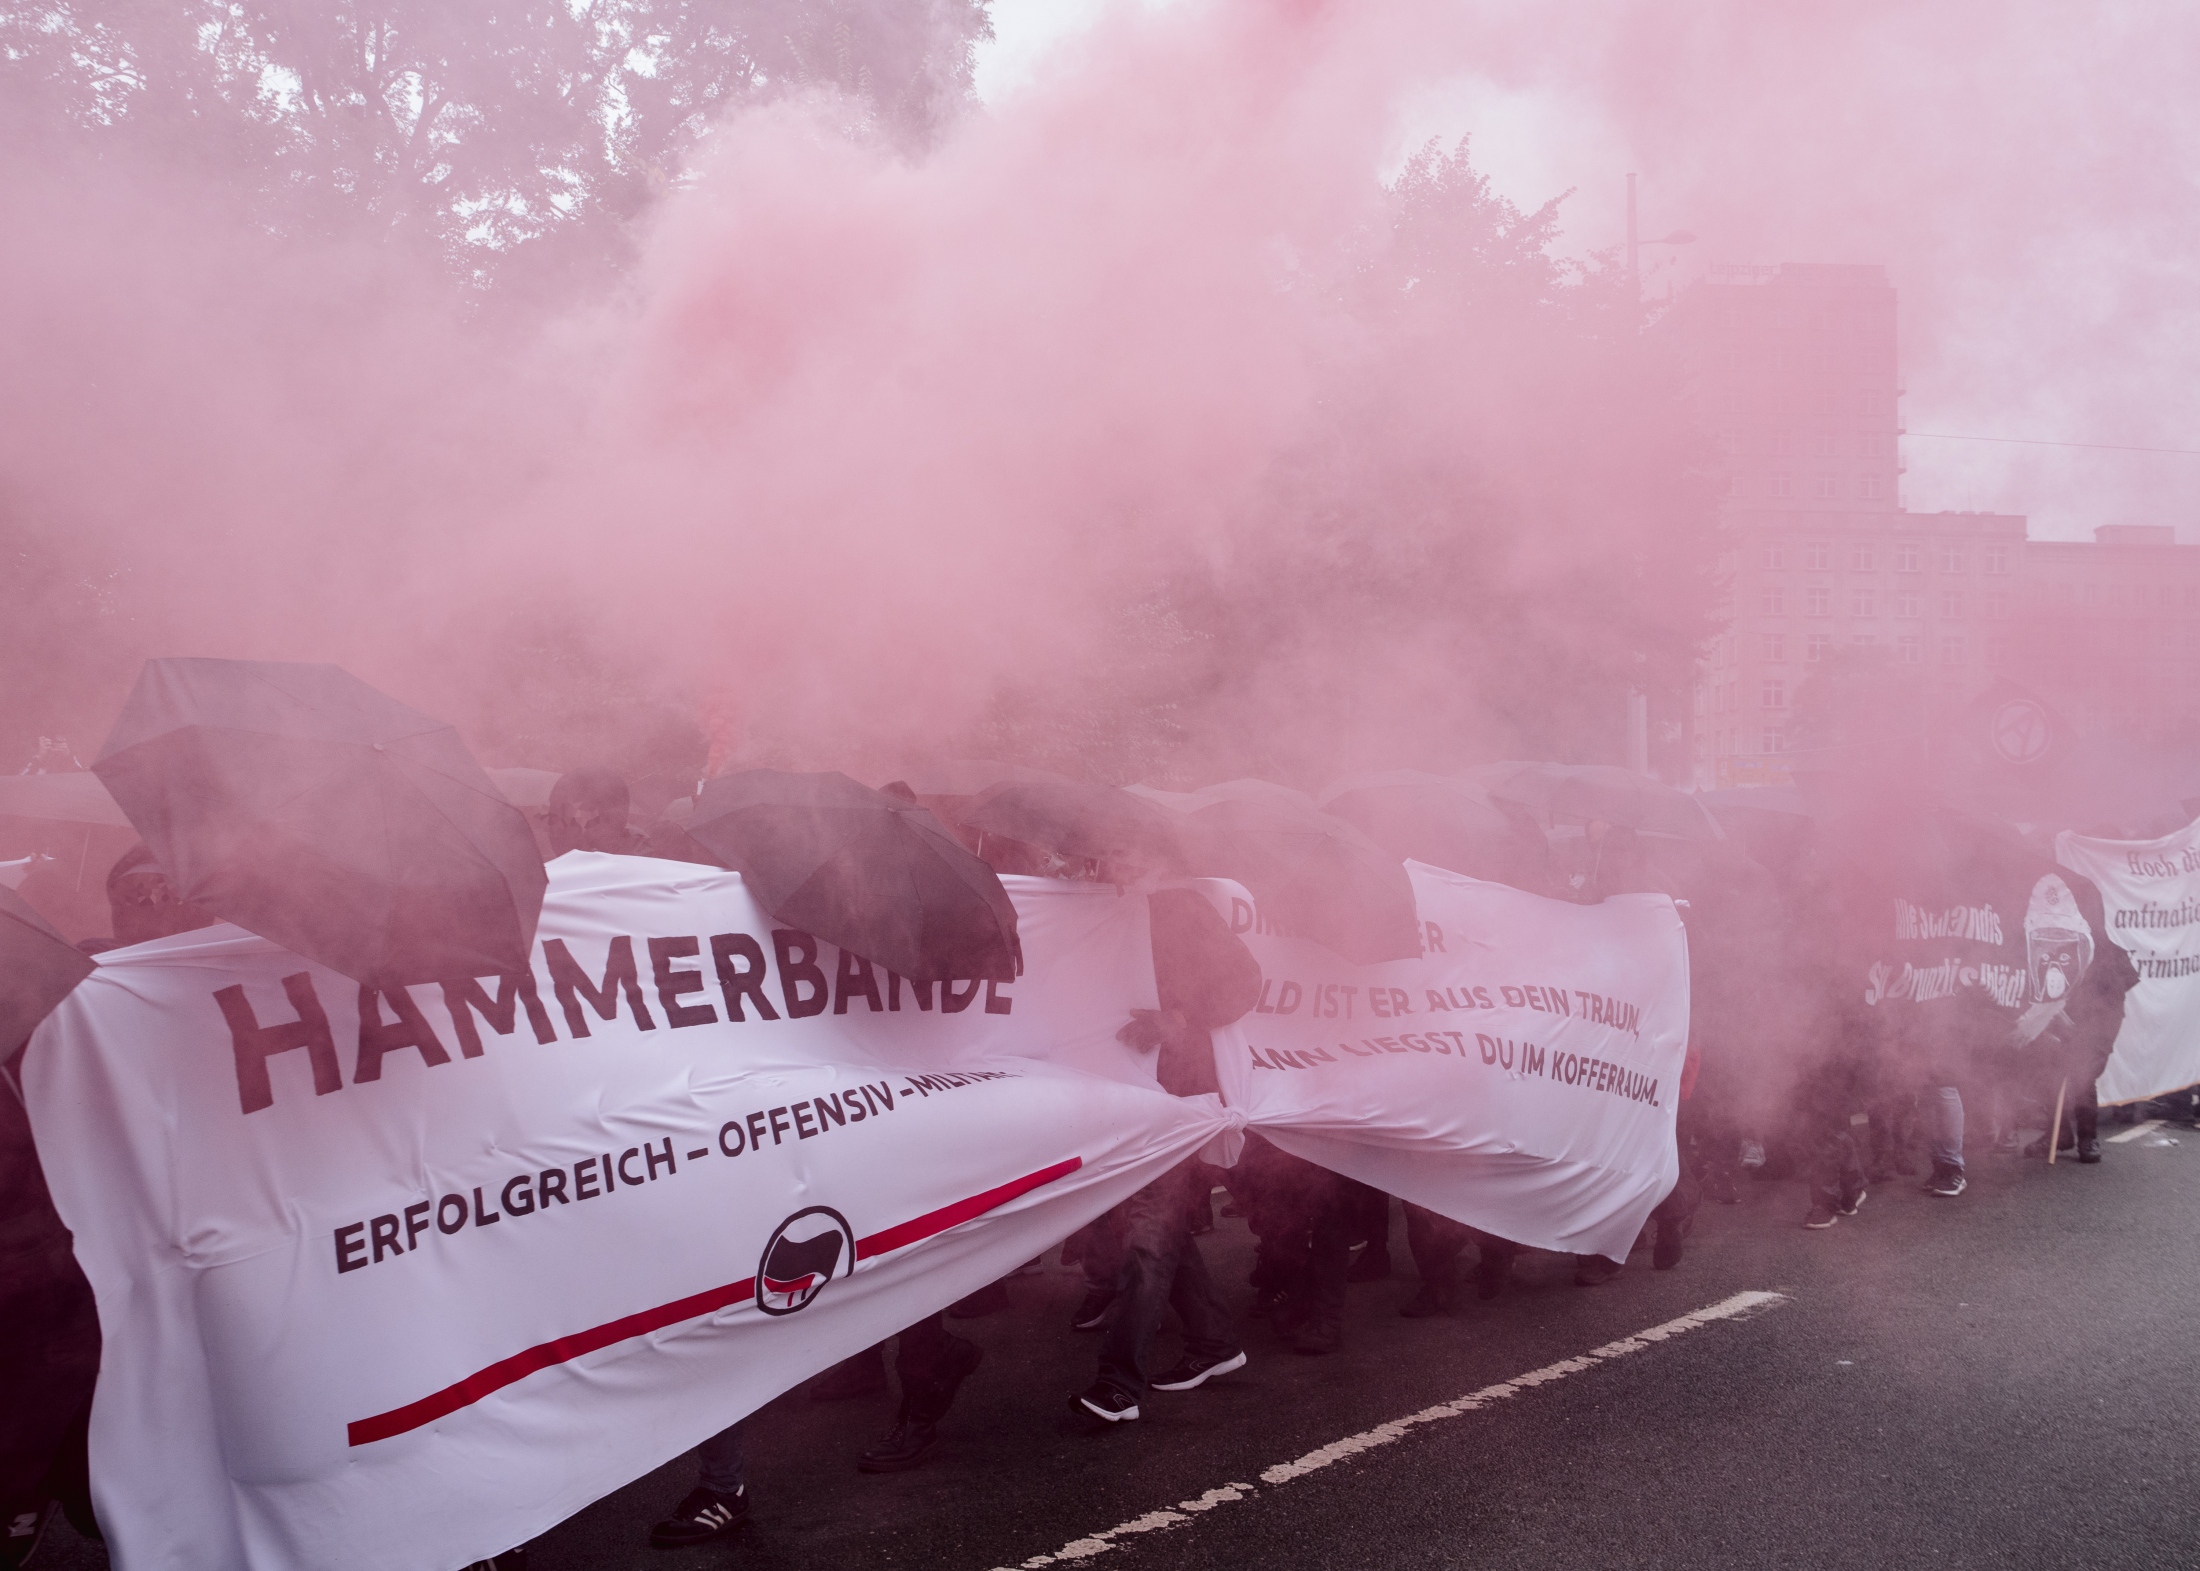 Protest & Events - "Wir sind alle Linx" Demonstration in Leipzig